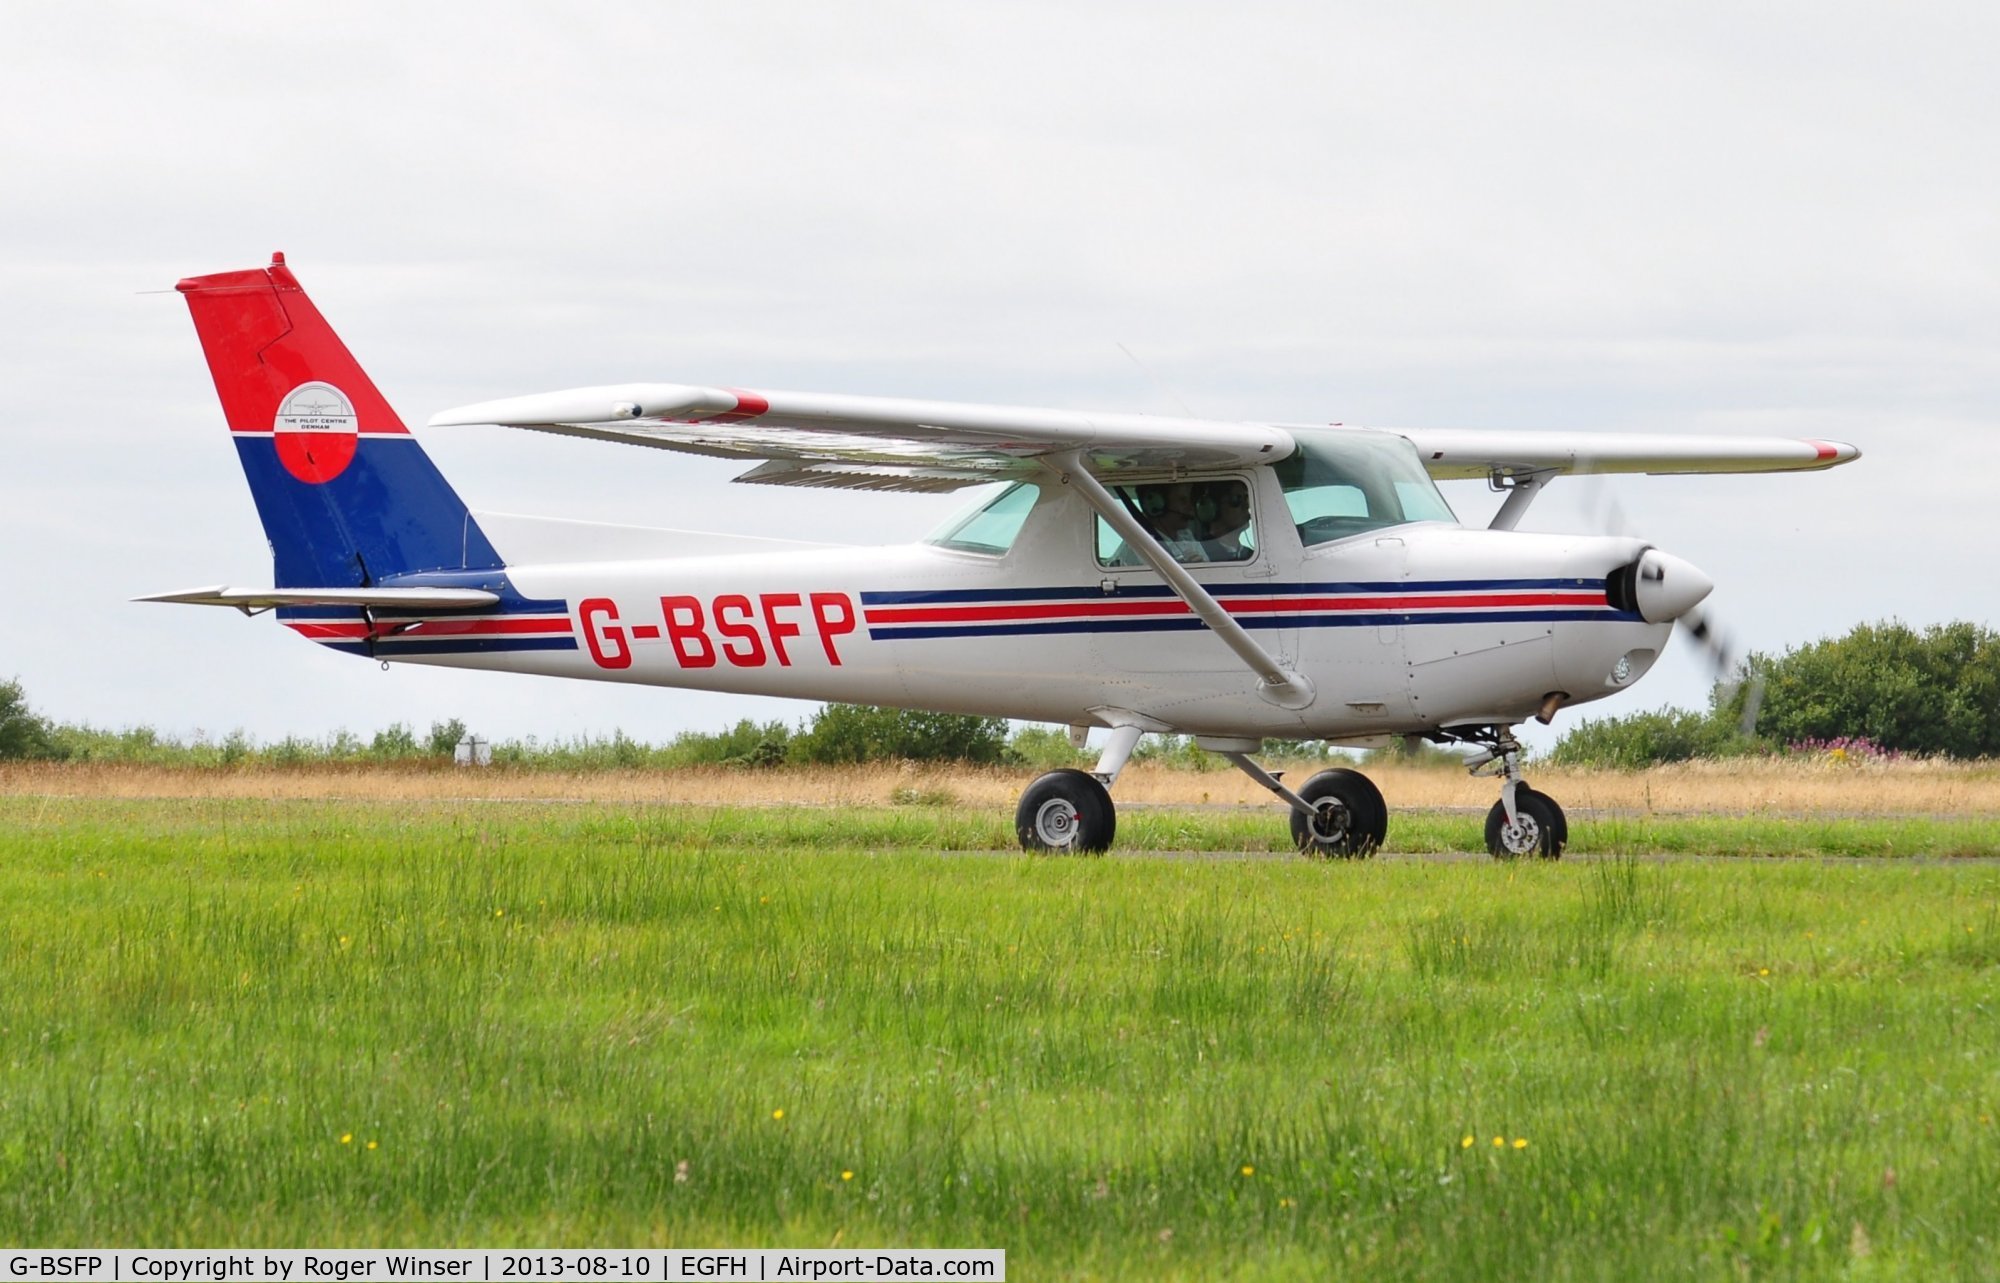 G-BSFP, 1982 Cessna 152 C/N 152-85548, Visiting 152 operated by the Pilot Centre at Denham Aerodrome.